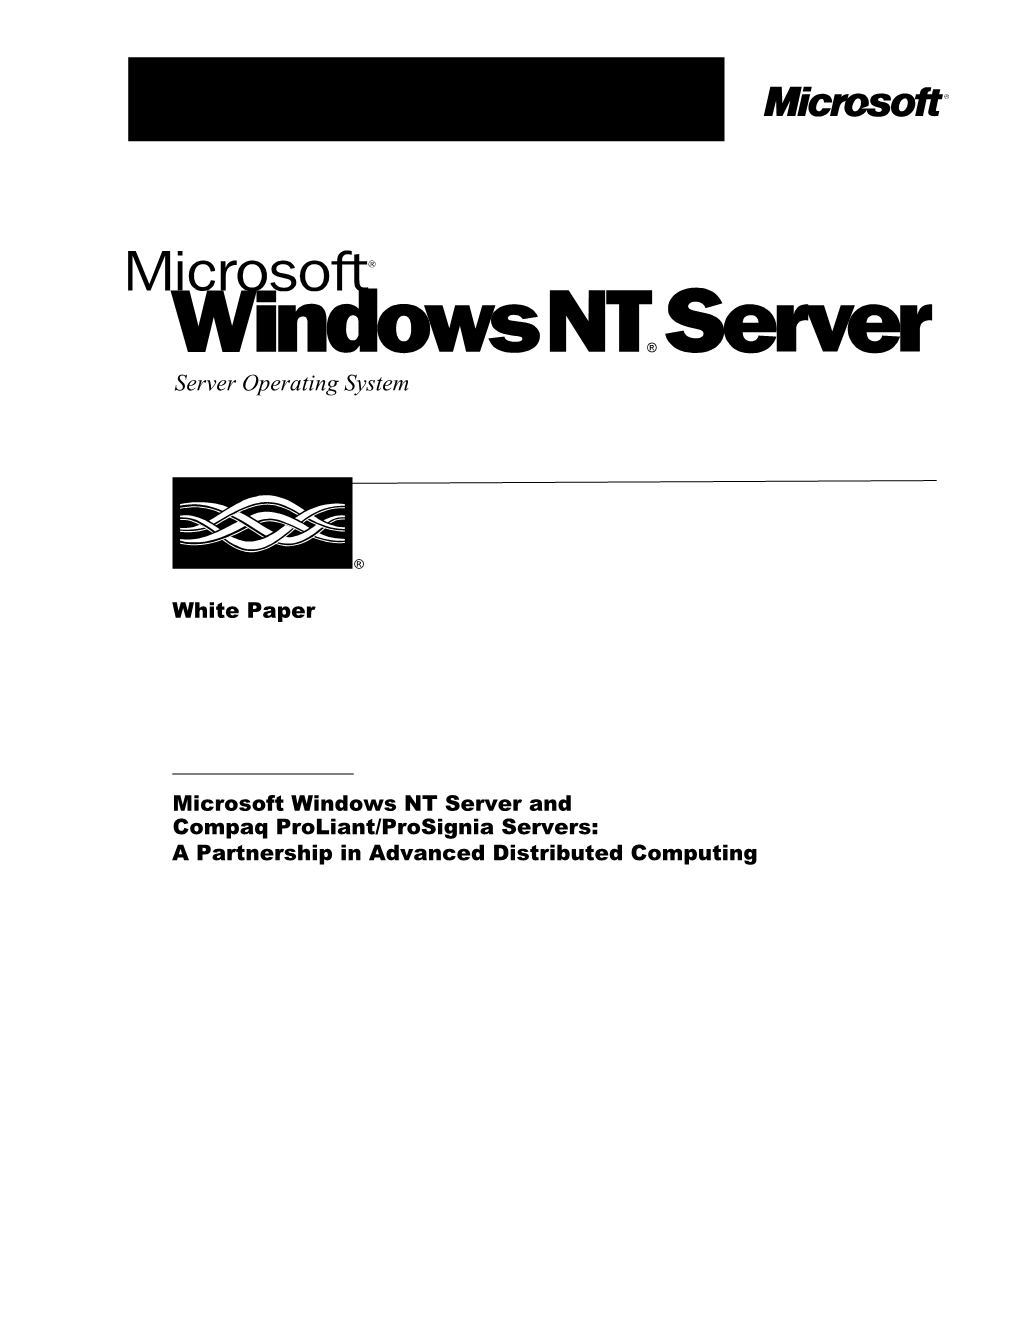 Microsoft Windows NT Server and Compaq Proliant/Prosignia Servers: a Partnership in Advanced Distributed Computing